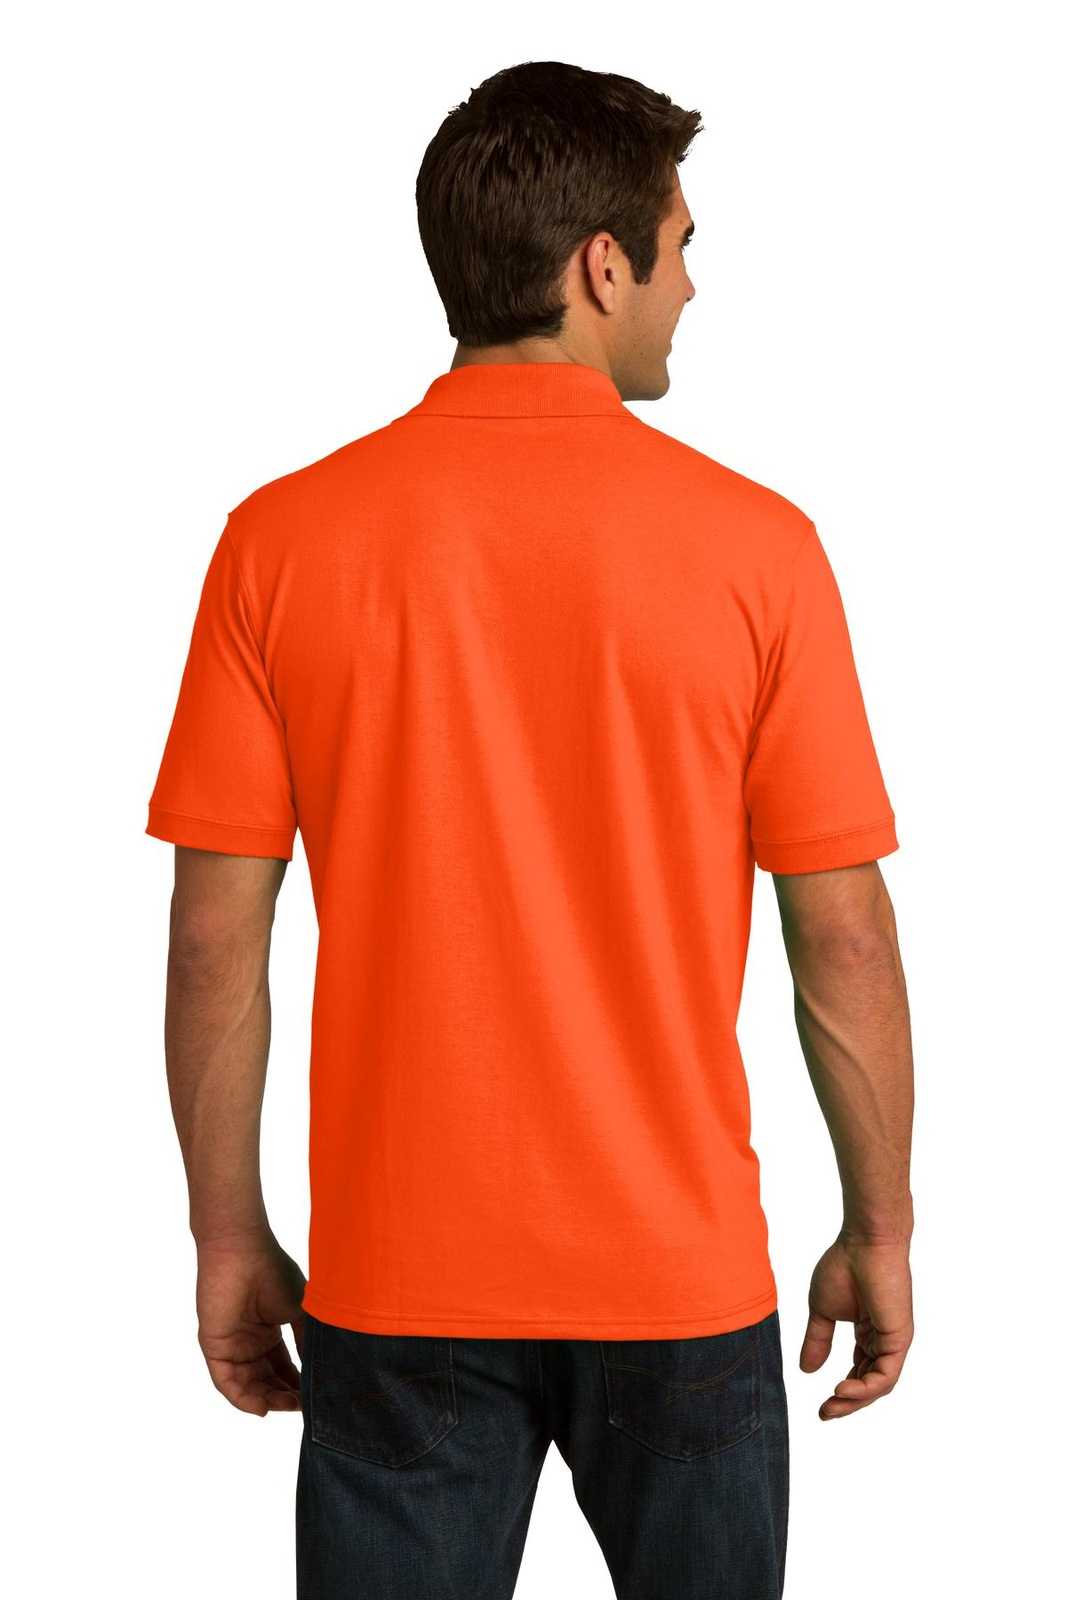 Port &amp; Company KP55 Core Blend Jersey Knit Polo - Safety Orange - HIT a Double - 2